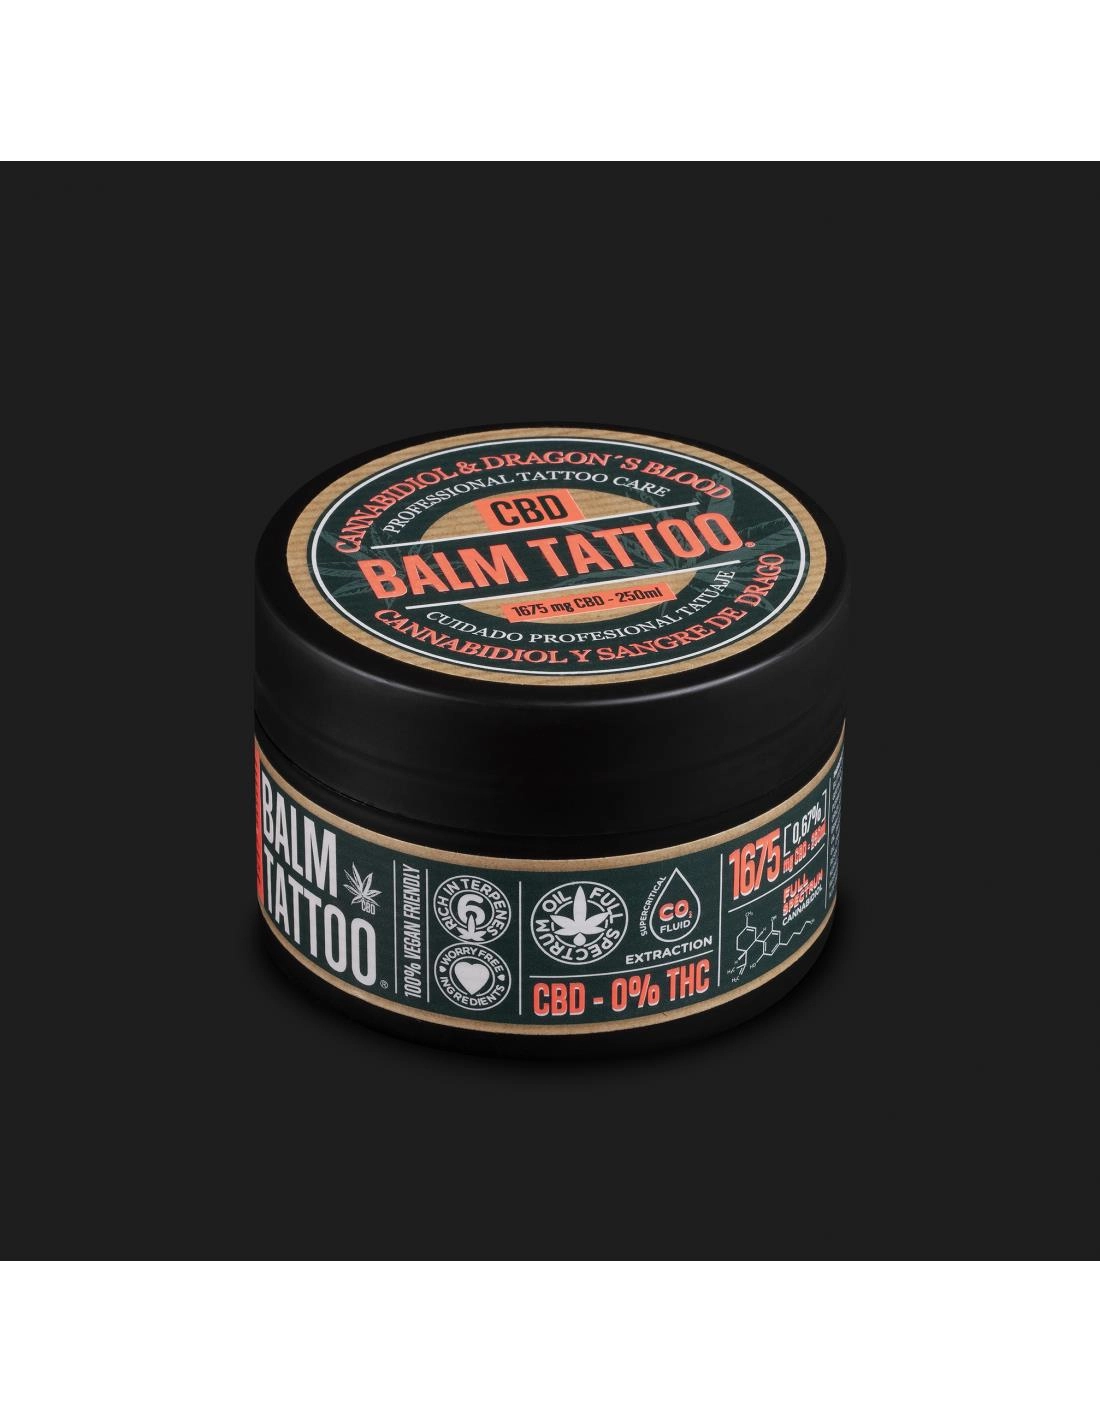 Balm Tattoo Dragon's Blood Butter (1.675mg) - 250 g